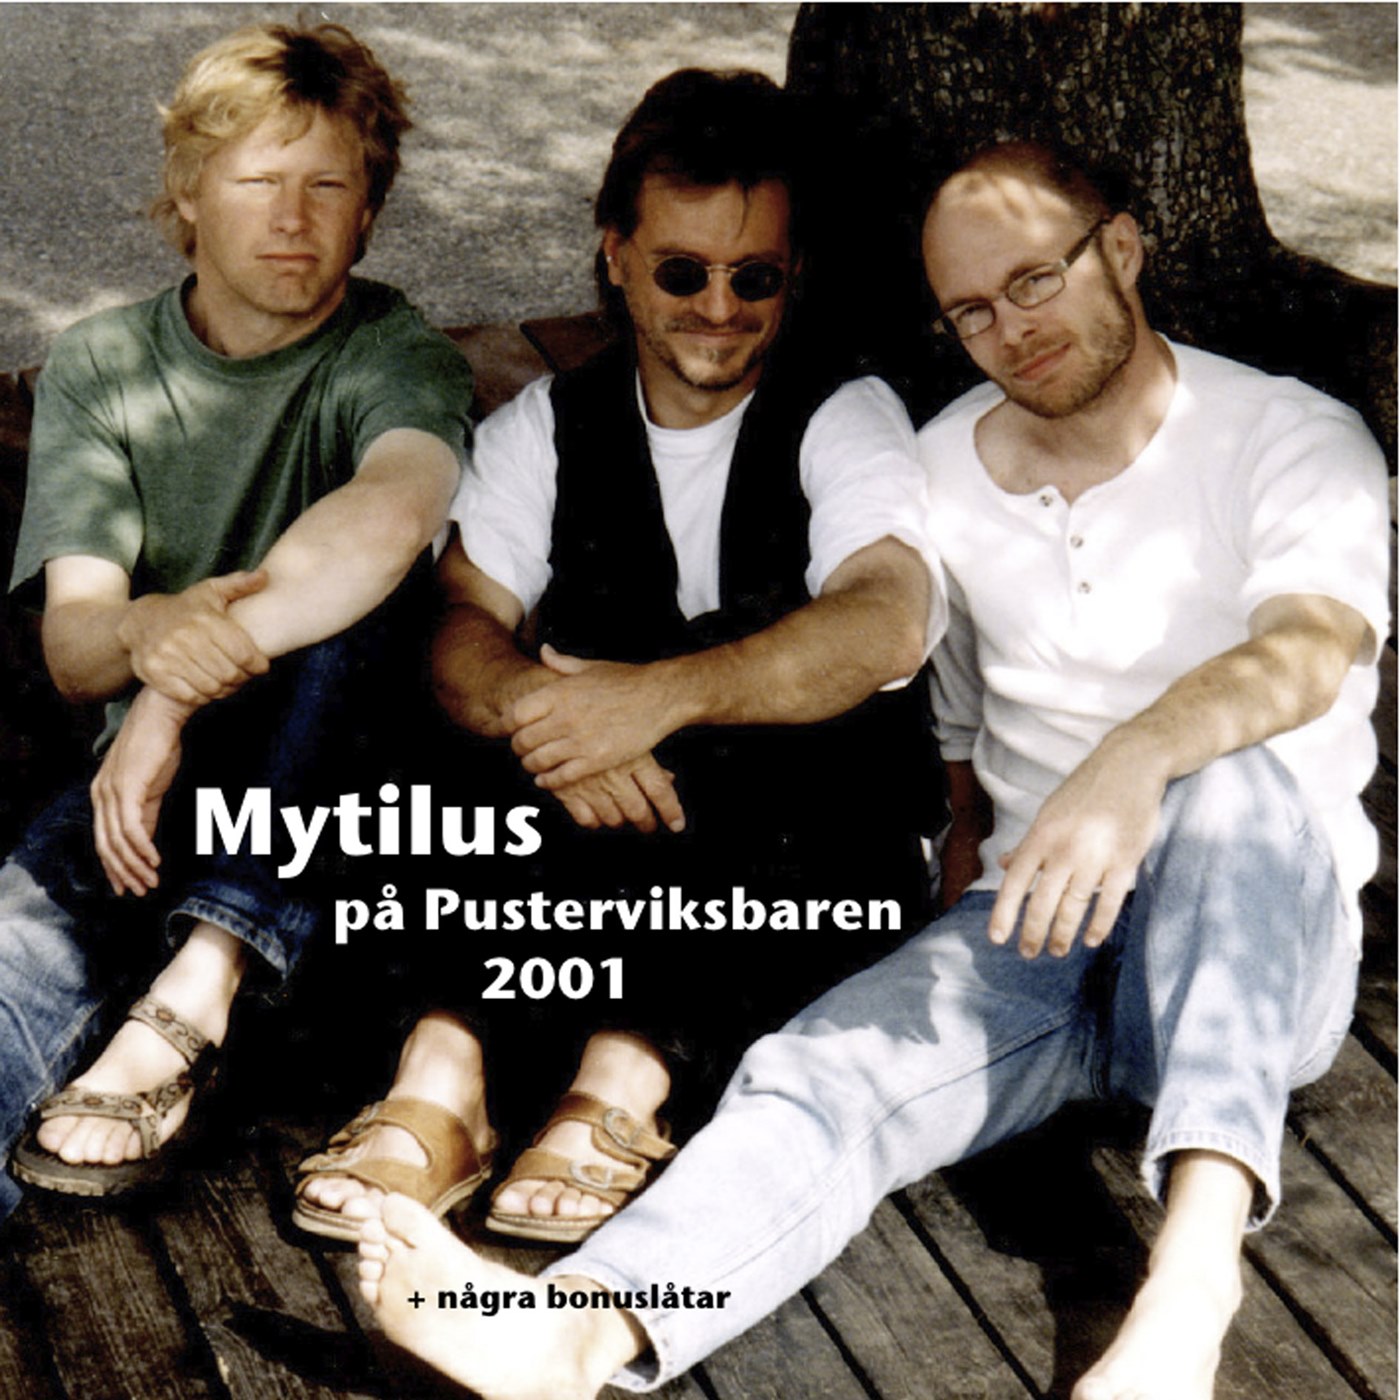 Mytilus på Pusterviksbaren 2001